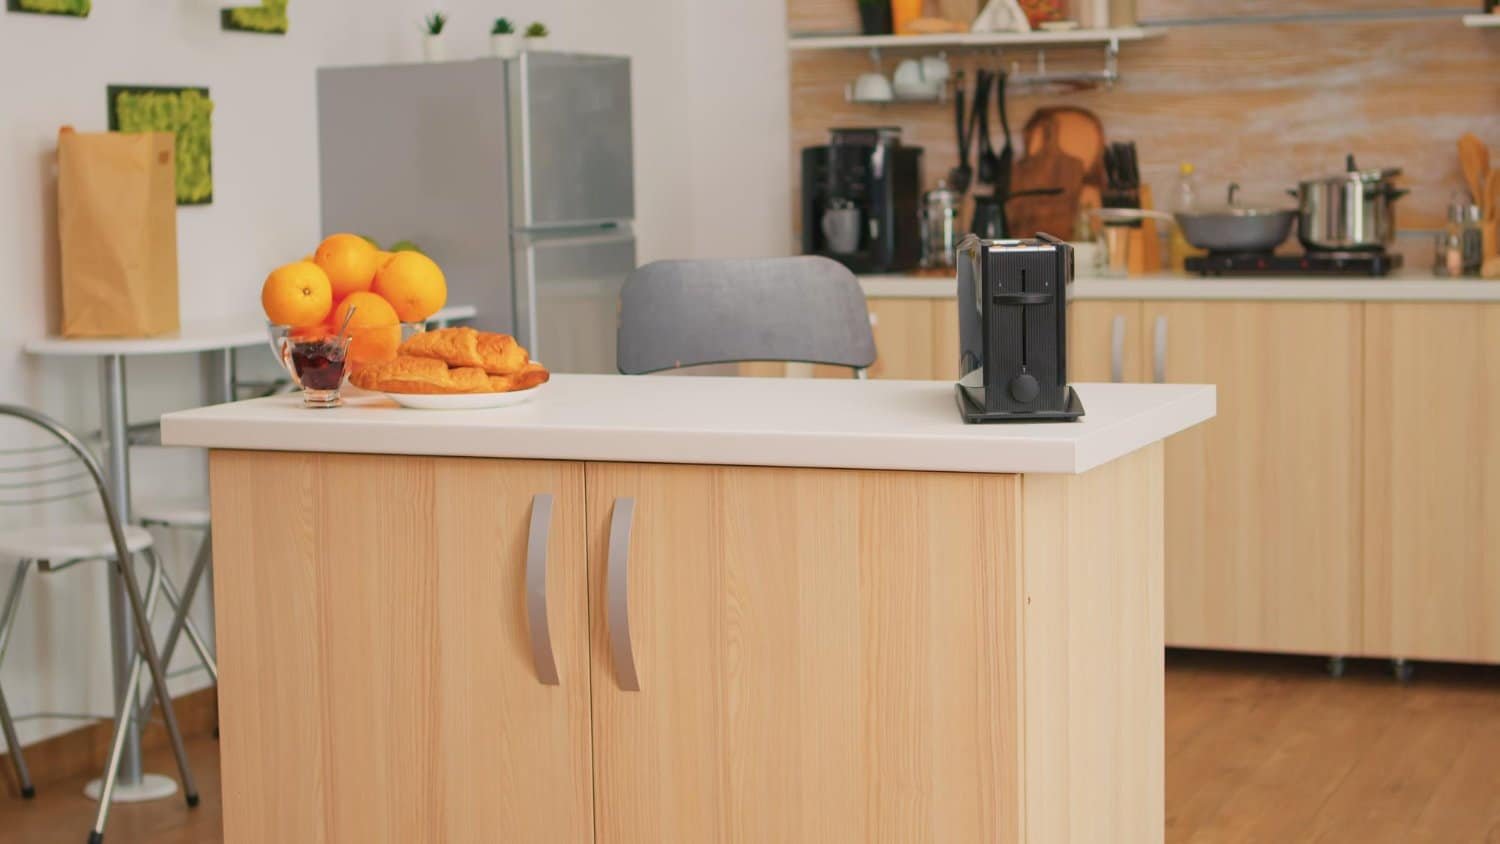 Kitchen Appliances: Smart and Energy-Efficient Options